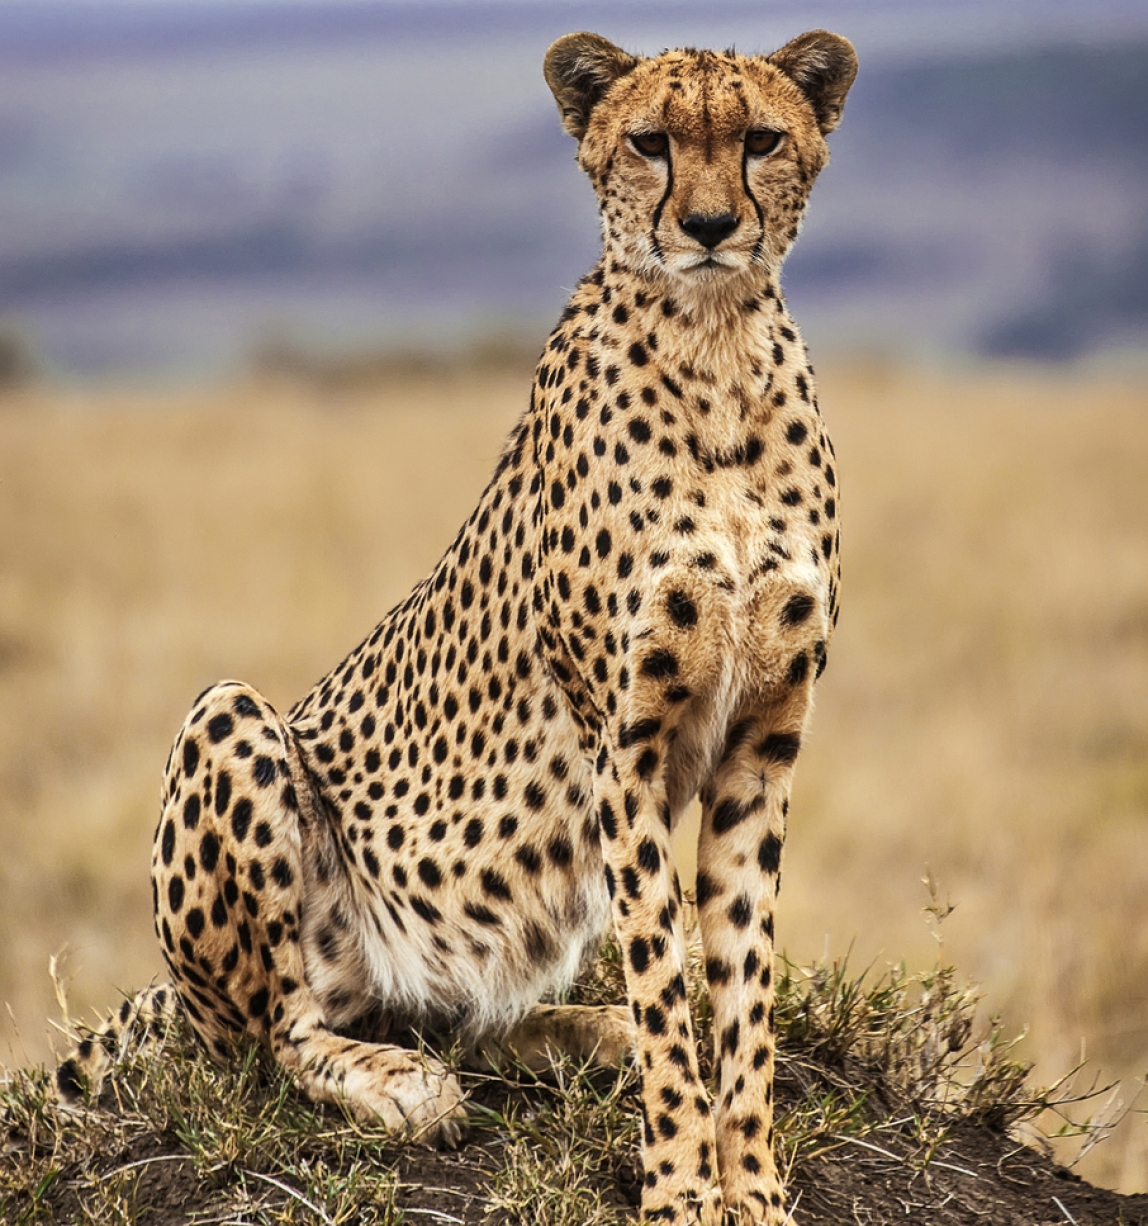 portrait of a cheetah sitting upright on rock in savannah